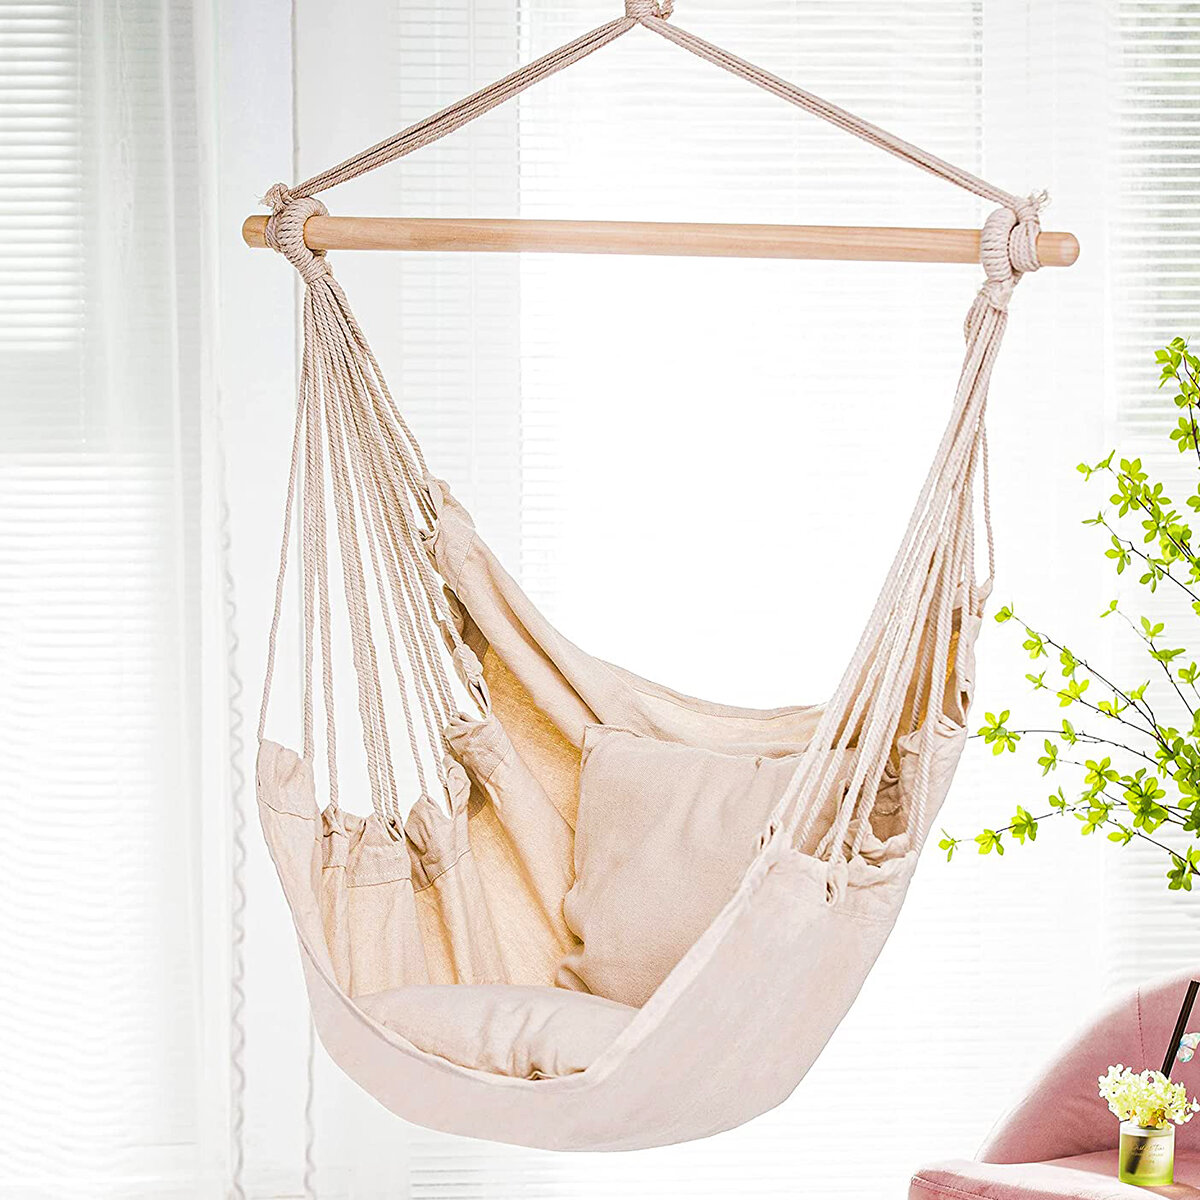 Portable Hammock Chair Bed Outdoor Hanging Swing Sleeping SeatHome Decor